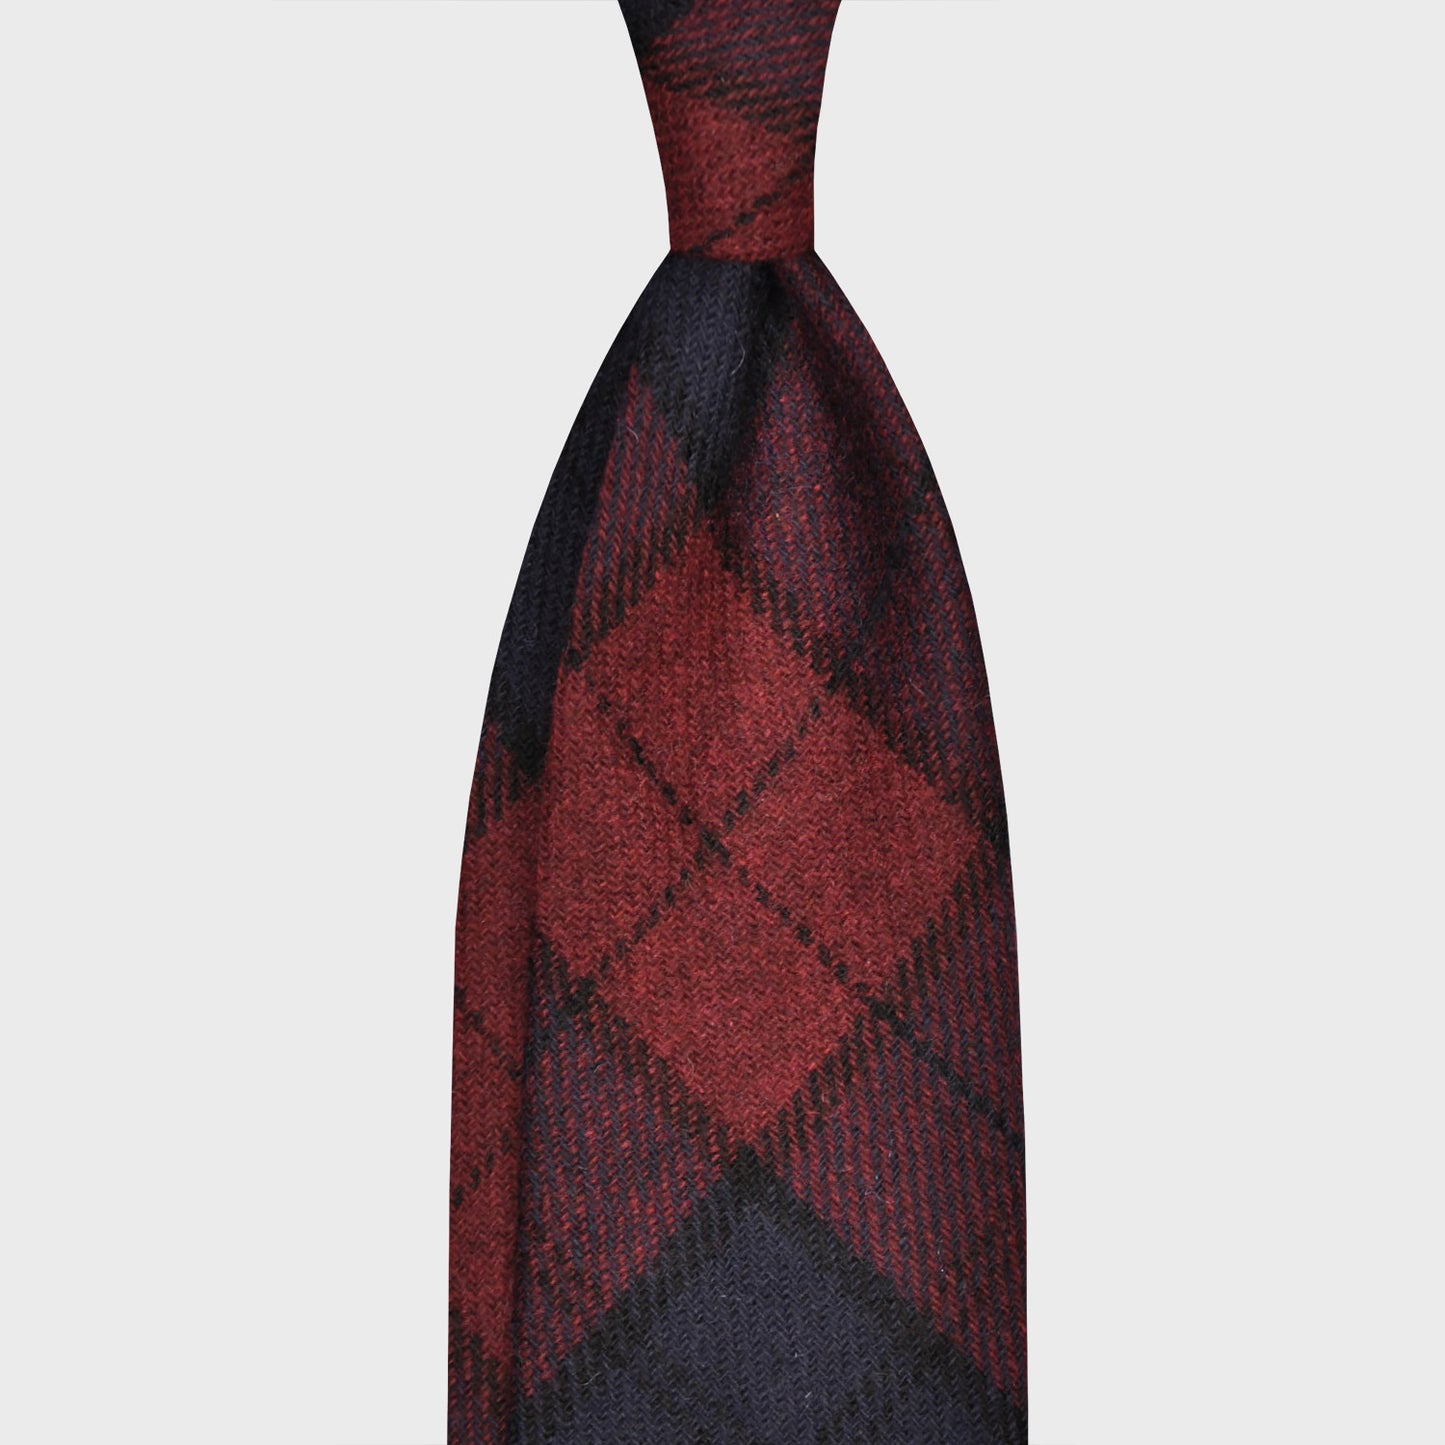 Load image into Gallery viewer, F.Marino Tweed Tie 3 Folds Black Watch Tartan Red-Wools Boutique Uomo
